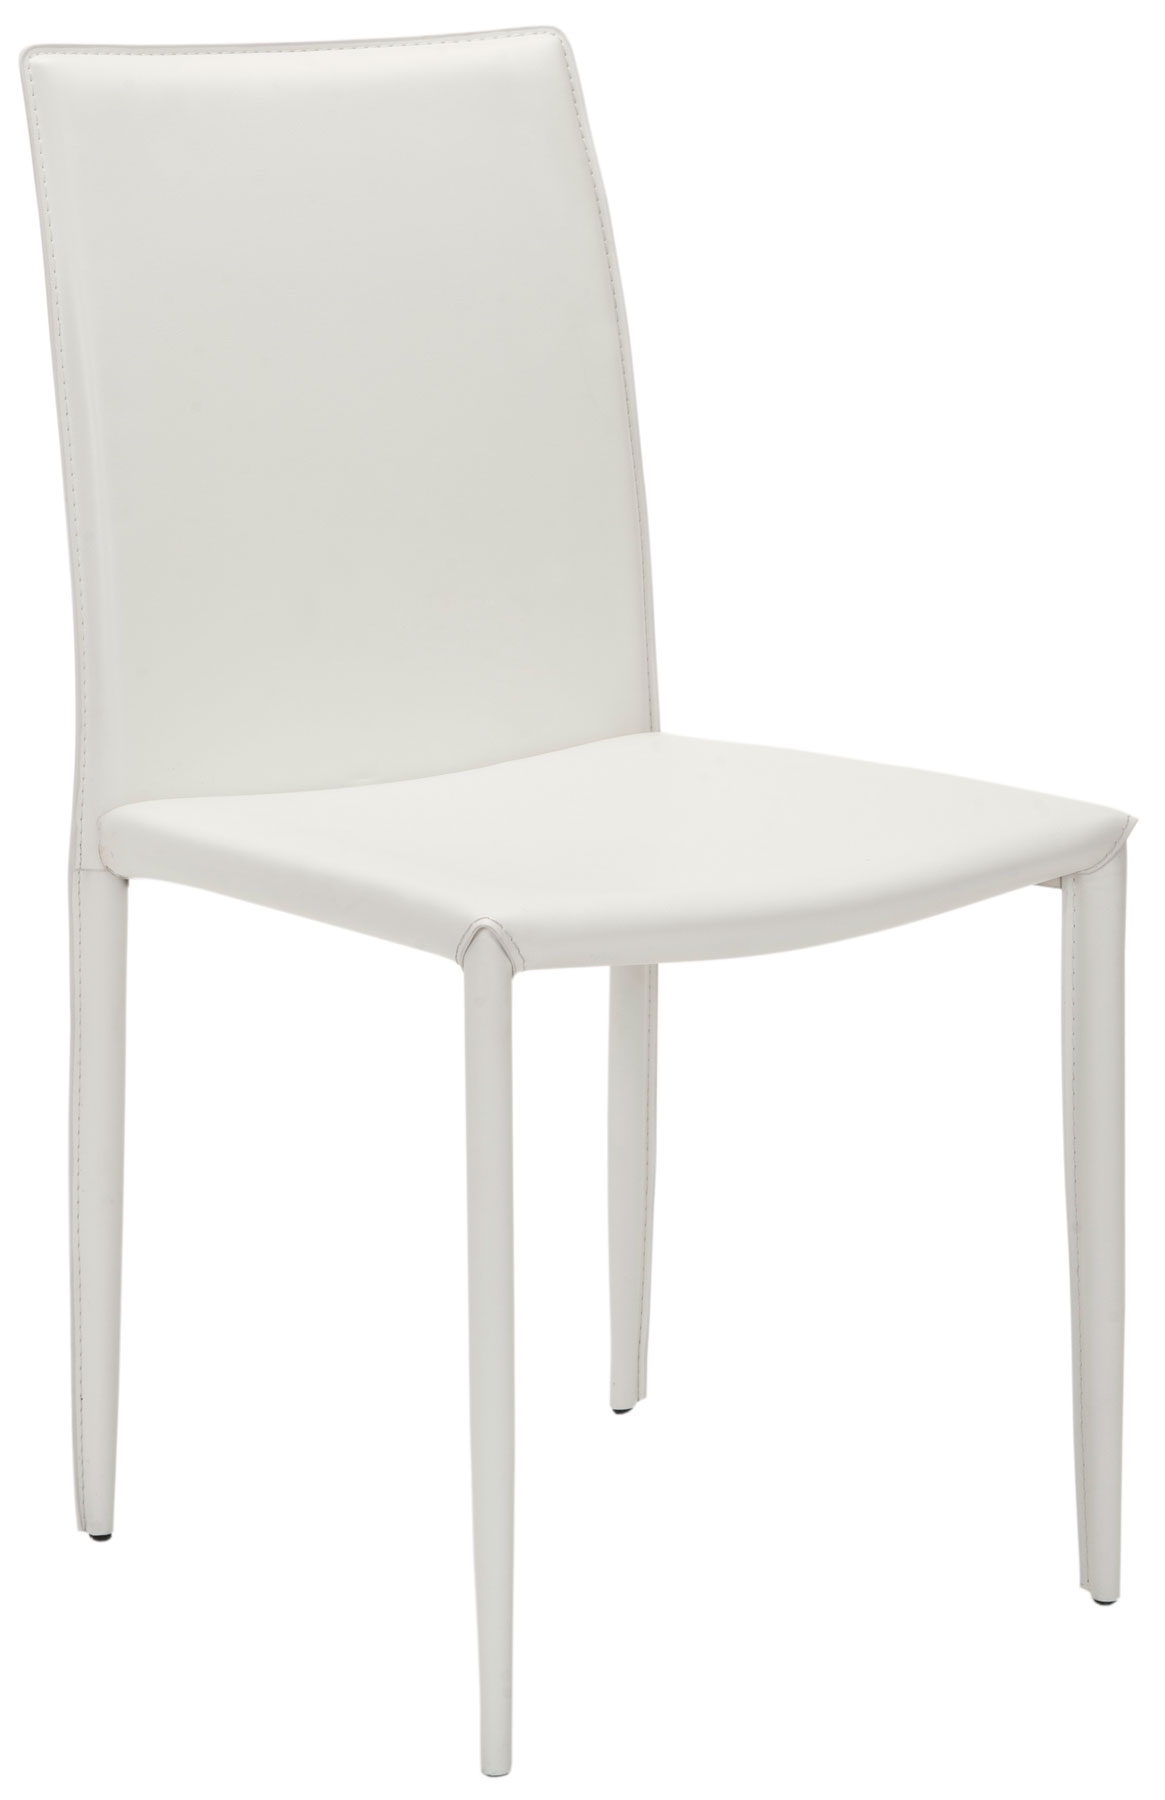 Karna 19''H Dining Chair - White - Arlo Home - Image 3